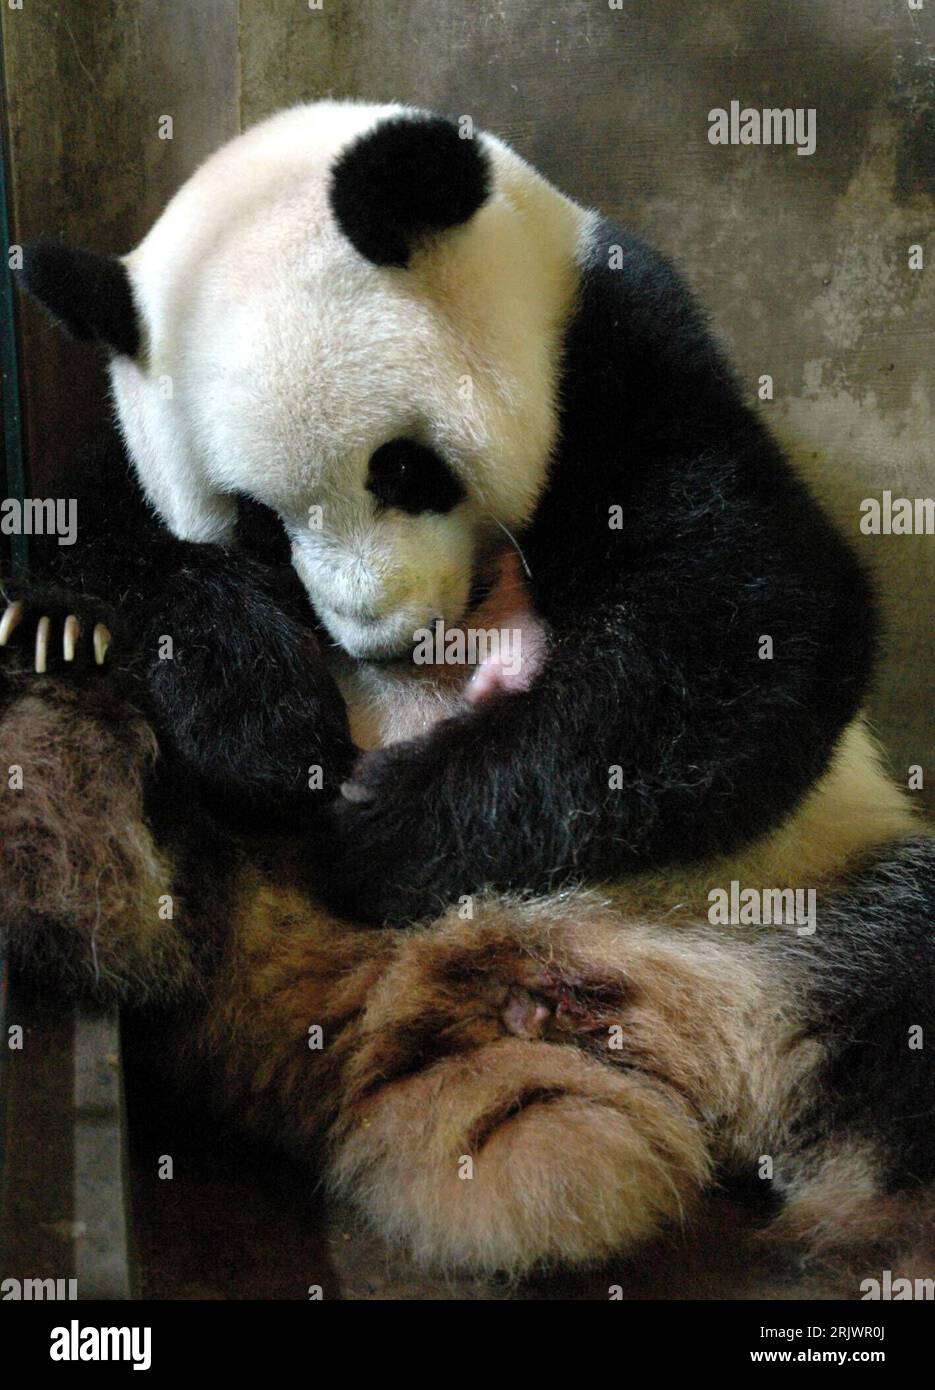 Bildnummer: 52047603 Datum: 20.08.2007 Copyright: imago/Xinhua großer Panda (Ailuropoda melanoleuca) mit Nachwuchs in der Panda-Aufzuchtstation im chinesischen Chengdu - PUBLICATIONxNOTxINxCHN, Tiere; 2007, Chengdu, Pandas, Pandabär, Pandabären, Bär, Bären, Säugetiere, Jungtier, Jungtiere, Zucht, Aufzucht; , hoch, Kbdig, Gruppenbild, China, , Stockfoto